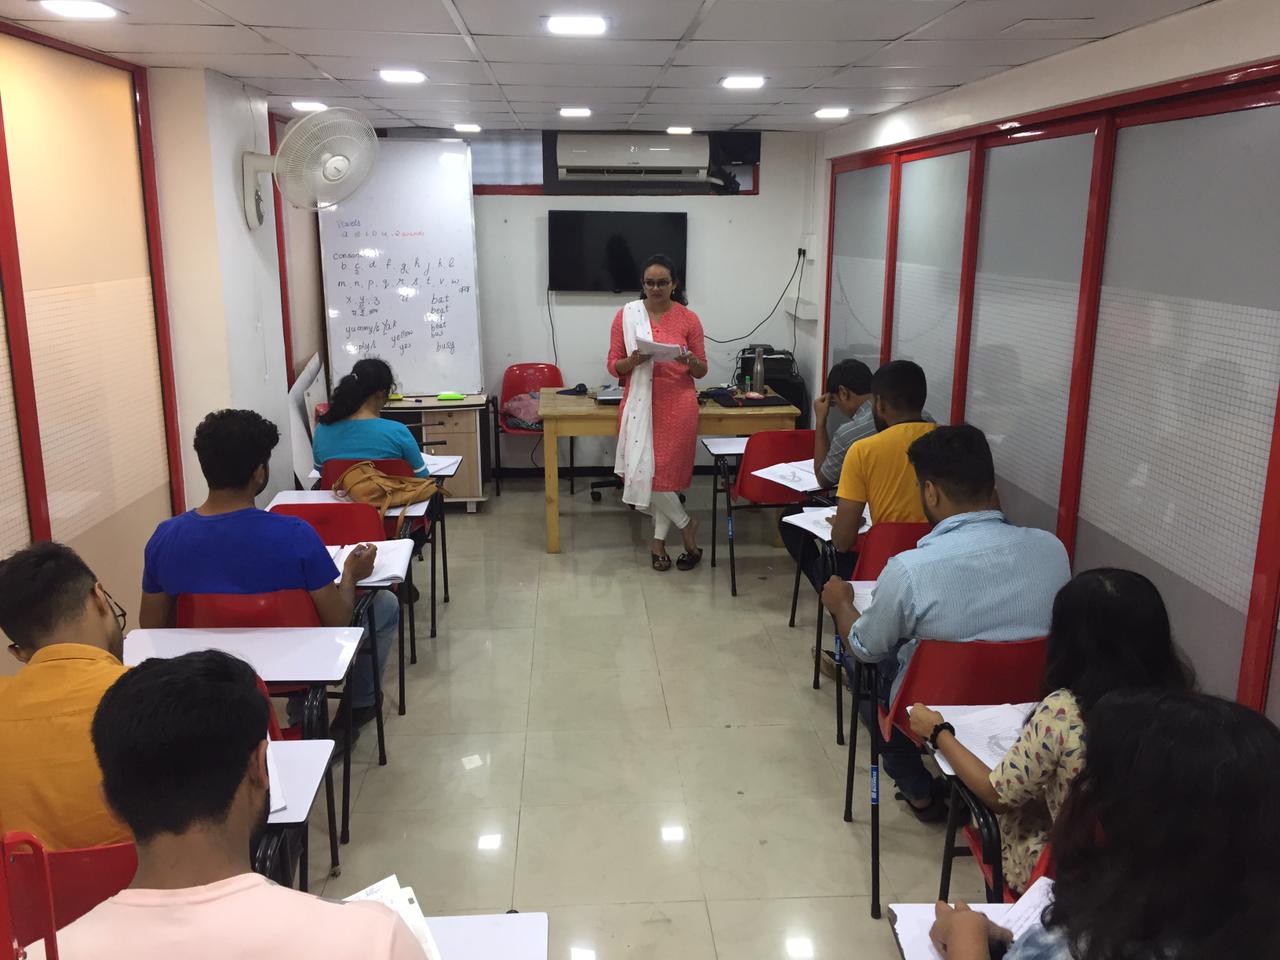 ESL teacher in India